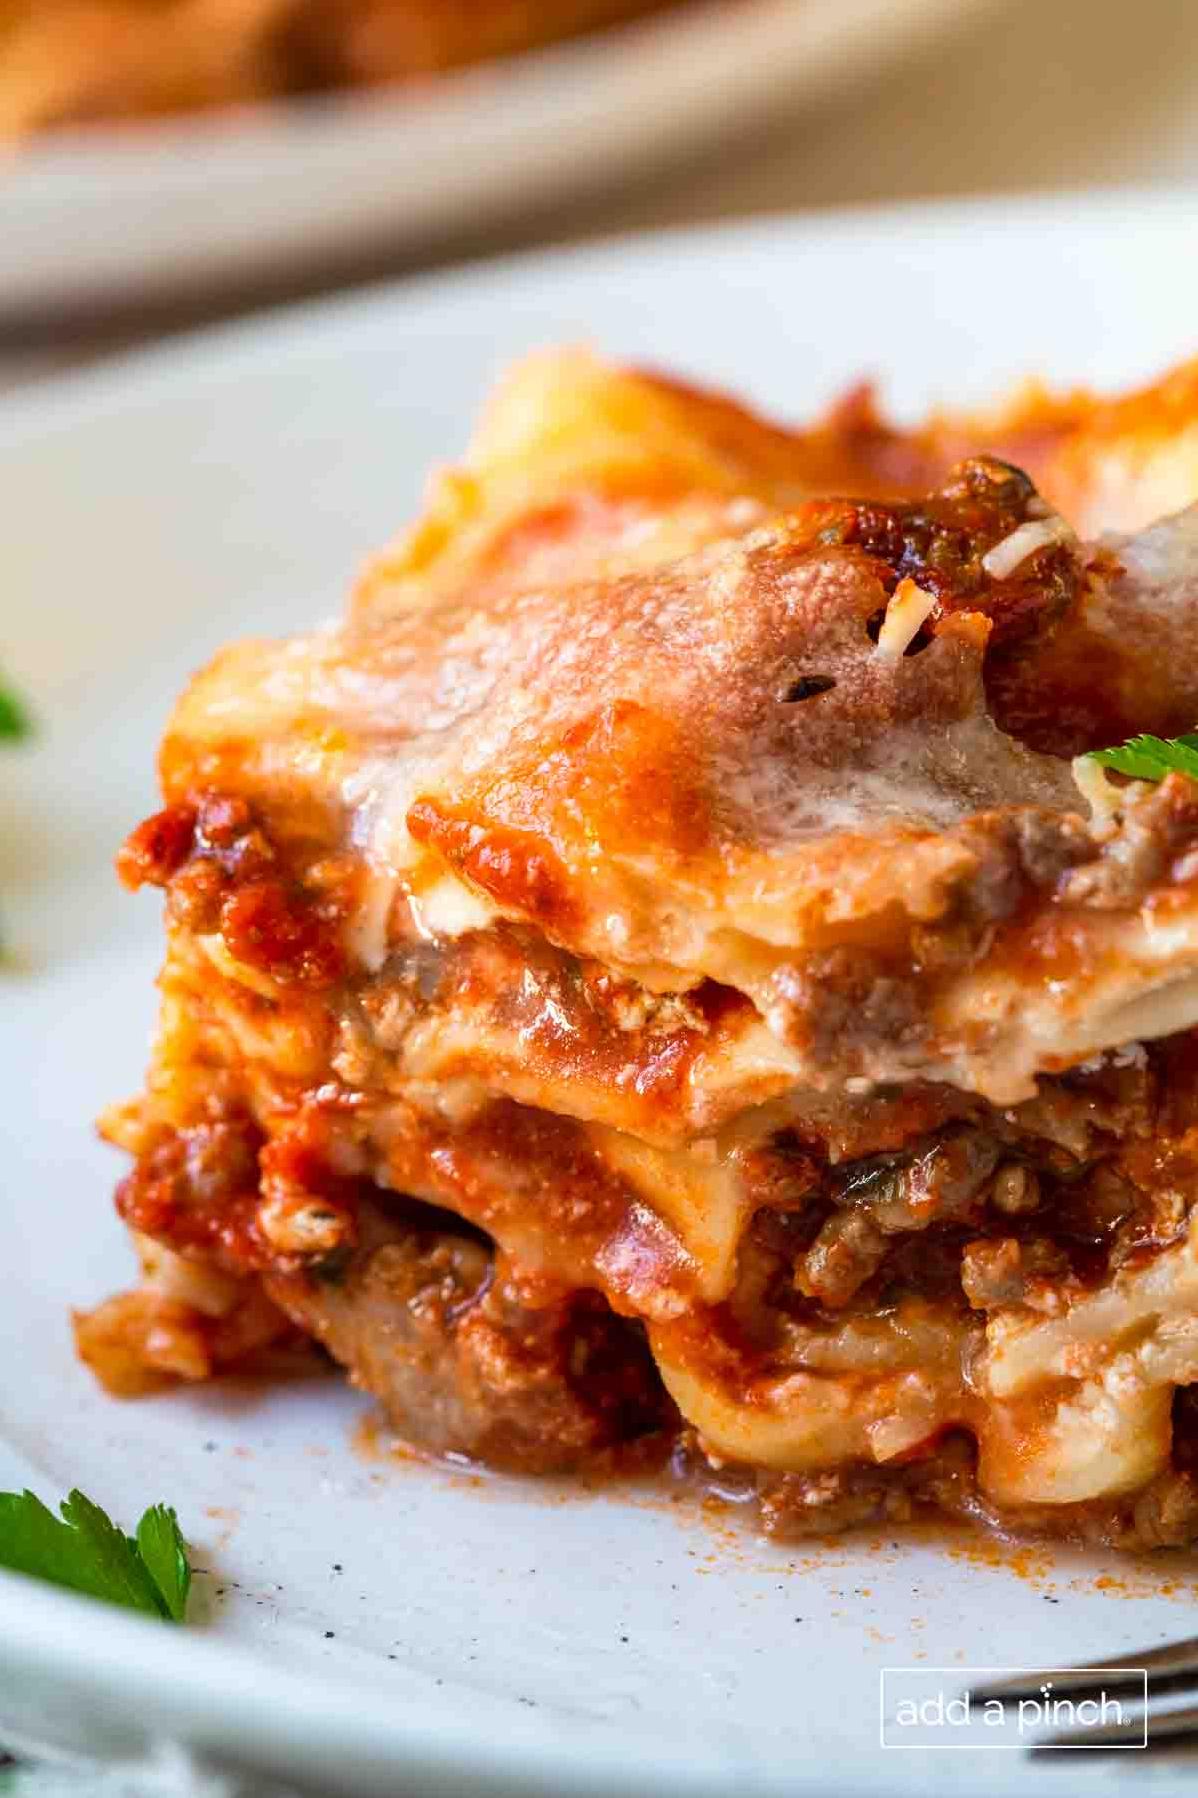  A classic Italian favorite captured in one dish